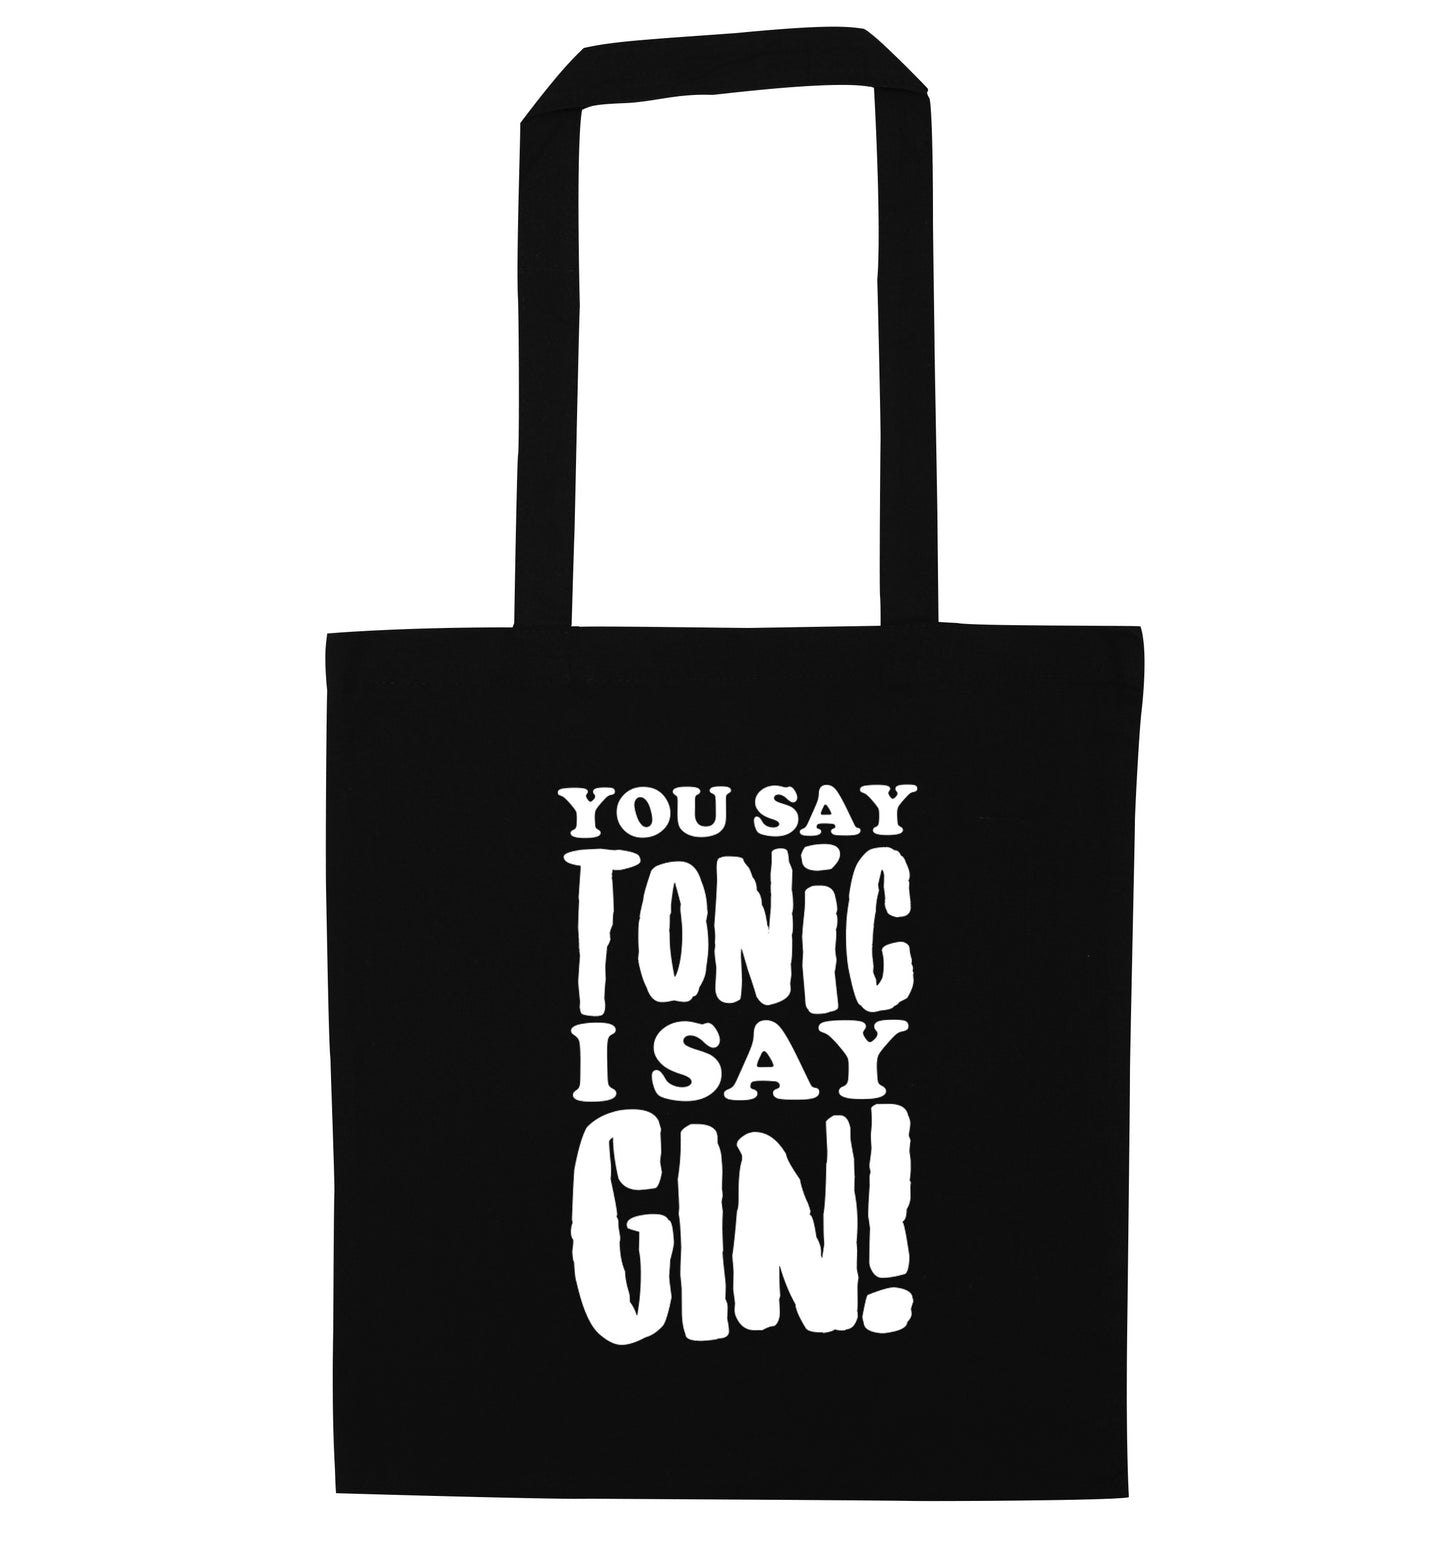 You say tonic I say gin! black tote bag